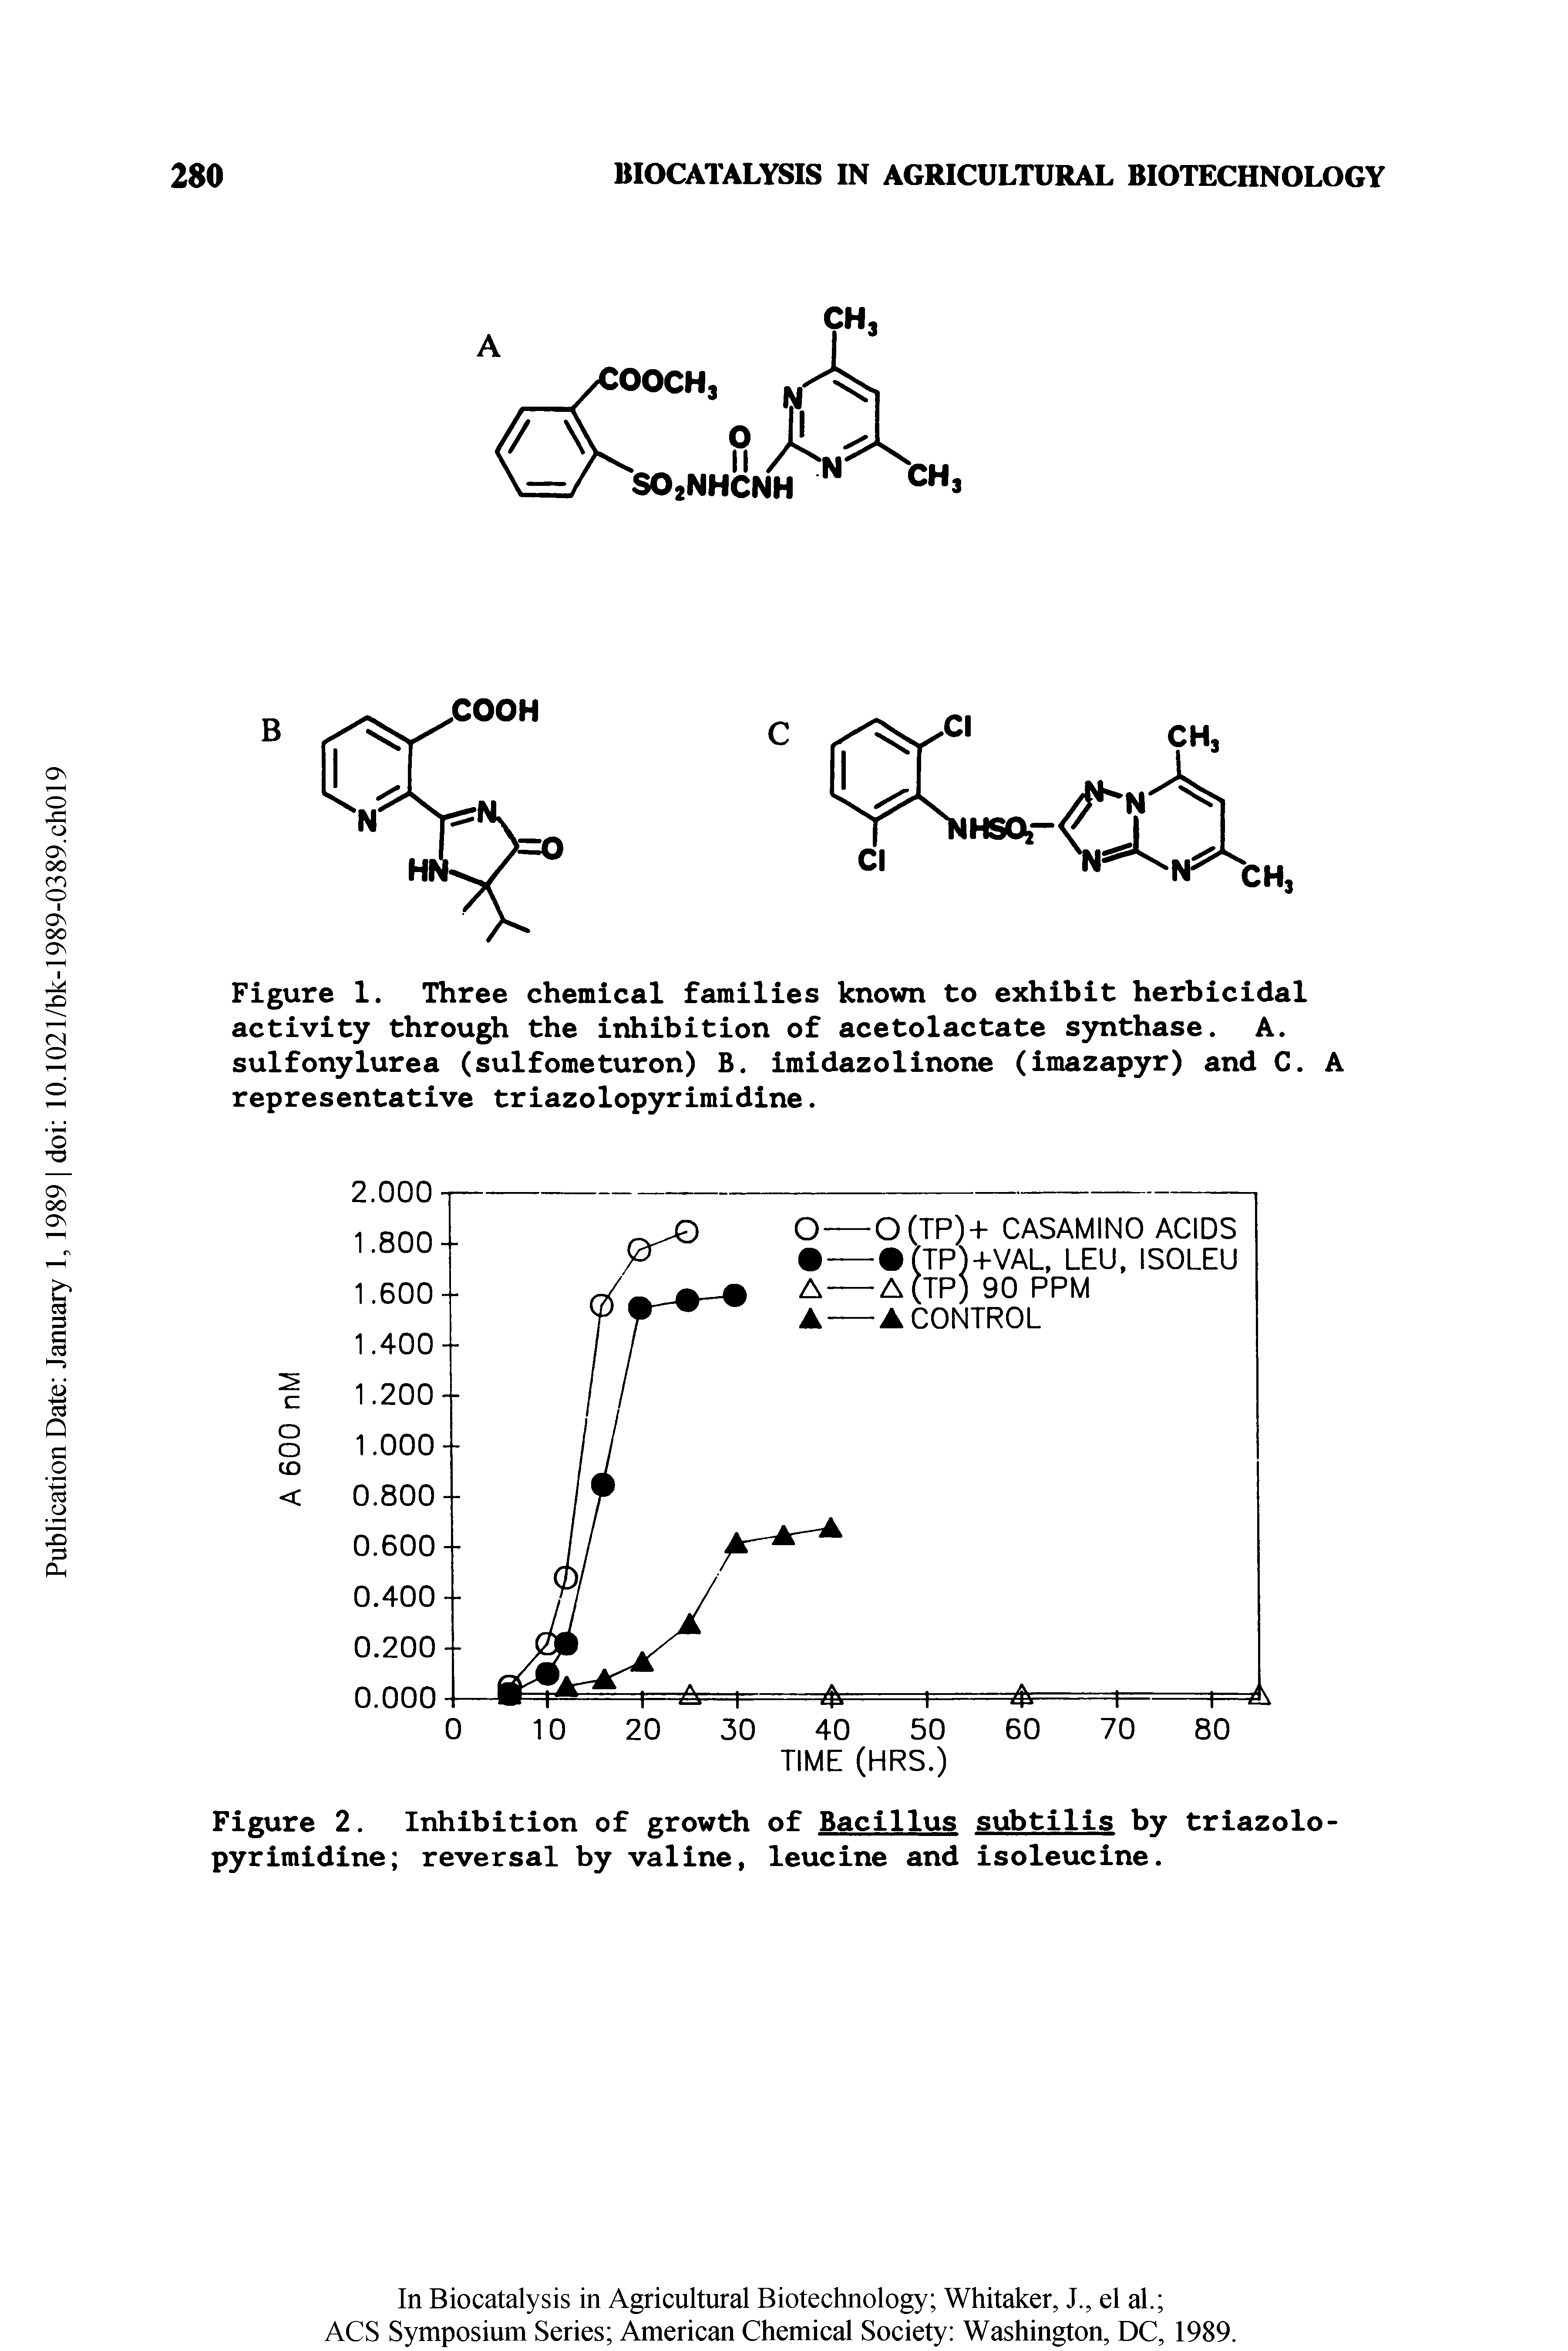 Figure 2. Inhibition of growth of Bacillus subtilis by triazolopyrimidine reversal by valine, leucine and isoleucine.